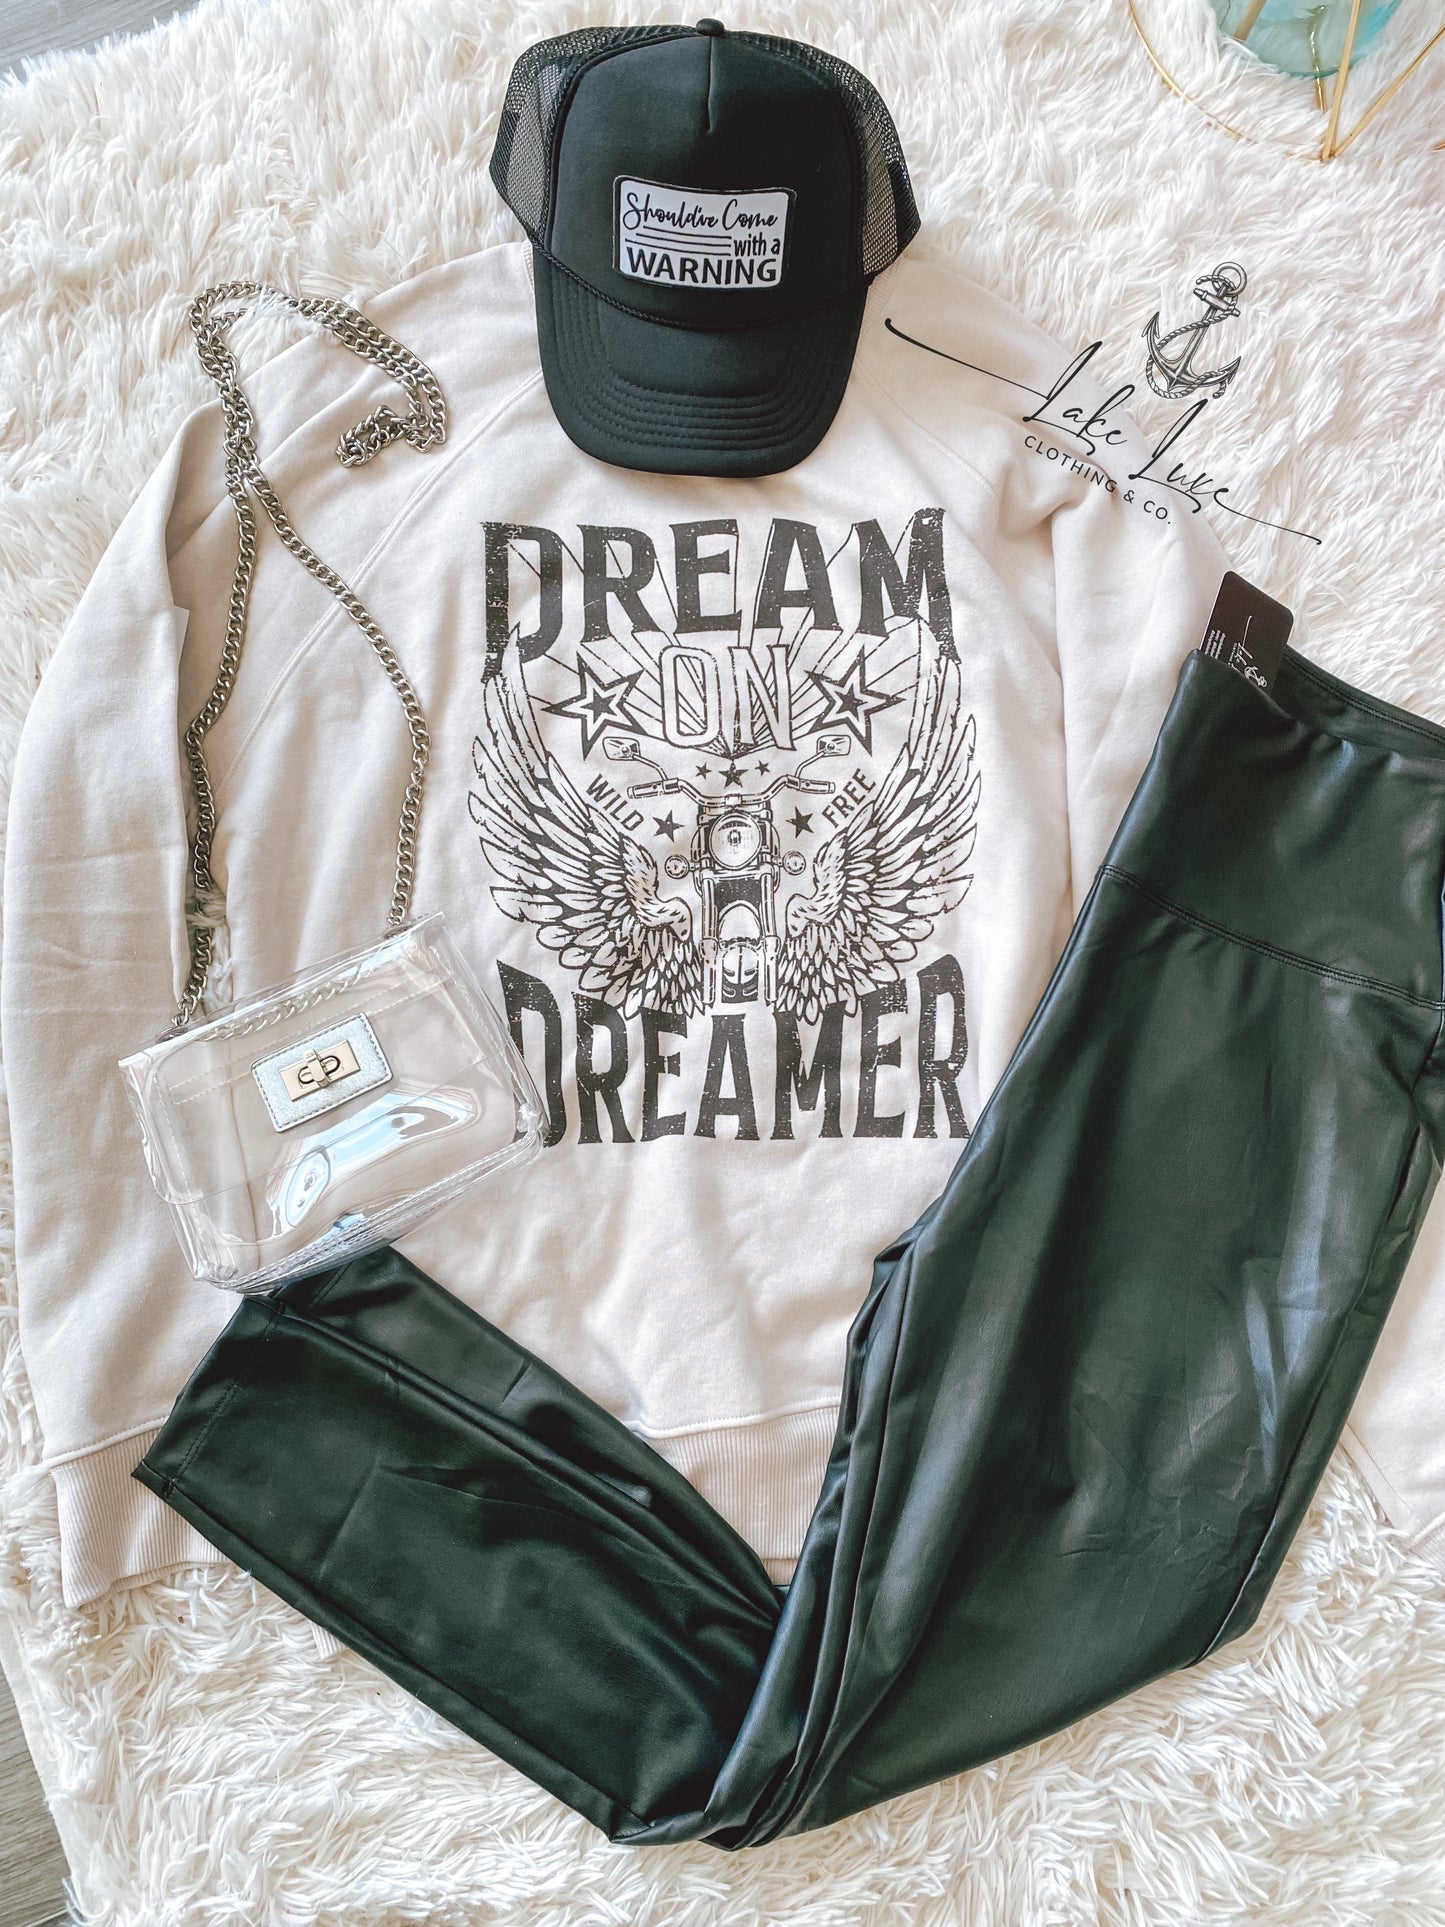 Dream on Dreamer sweatshirt